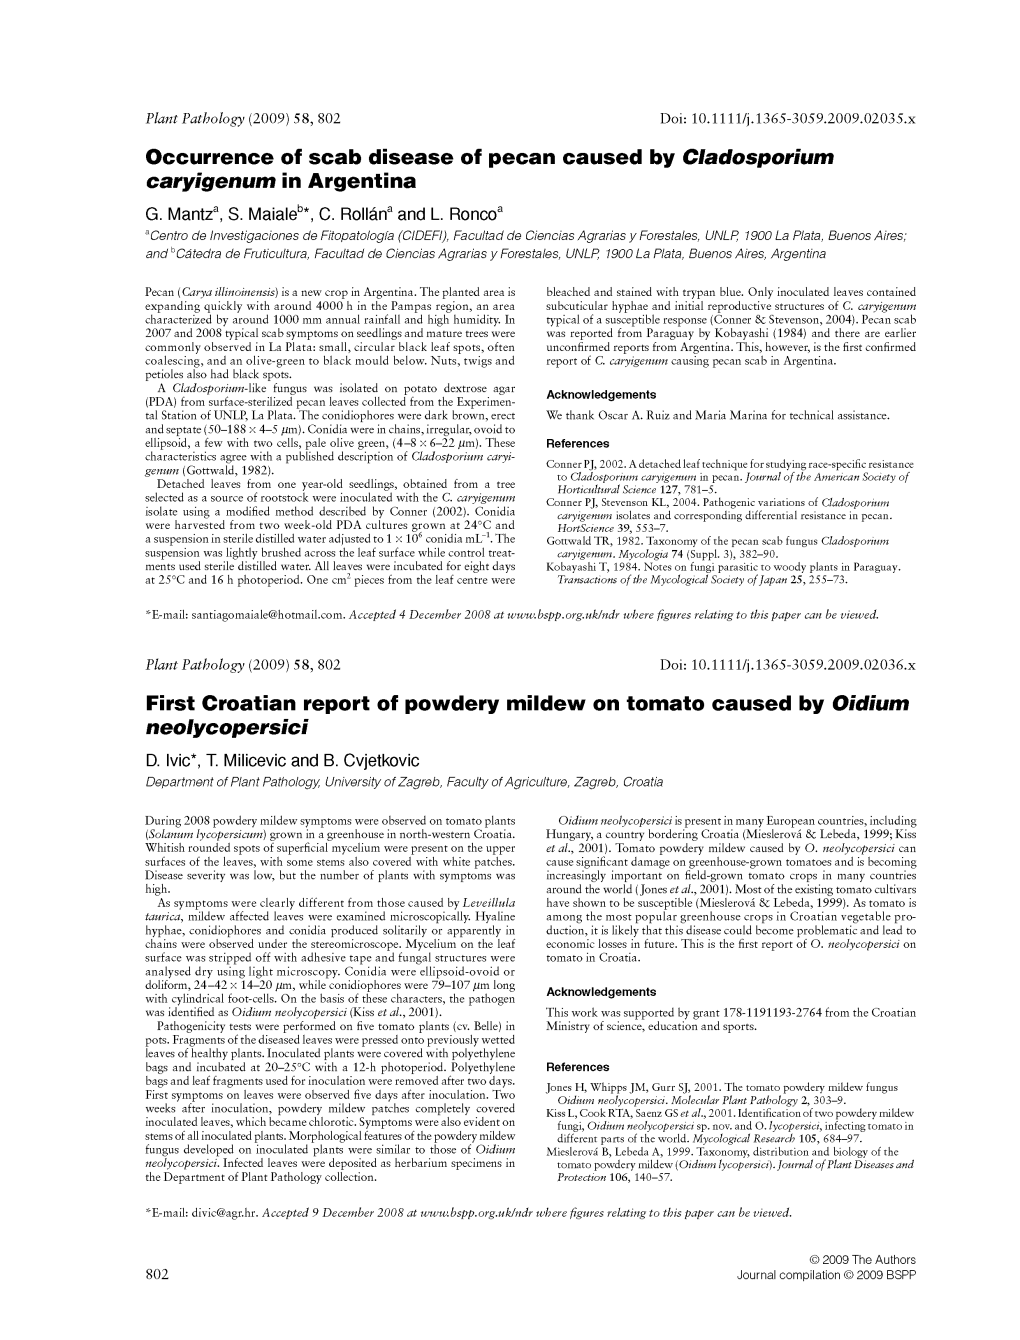 Occurrence of Scab Disease of Pecan Caused by Cladosporium Caryigenum in Argentina G